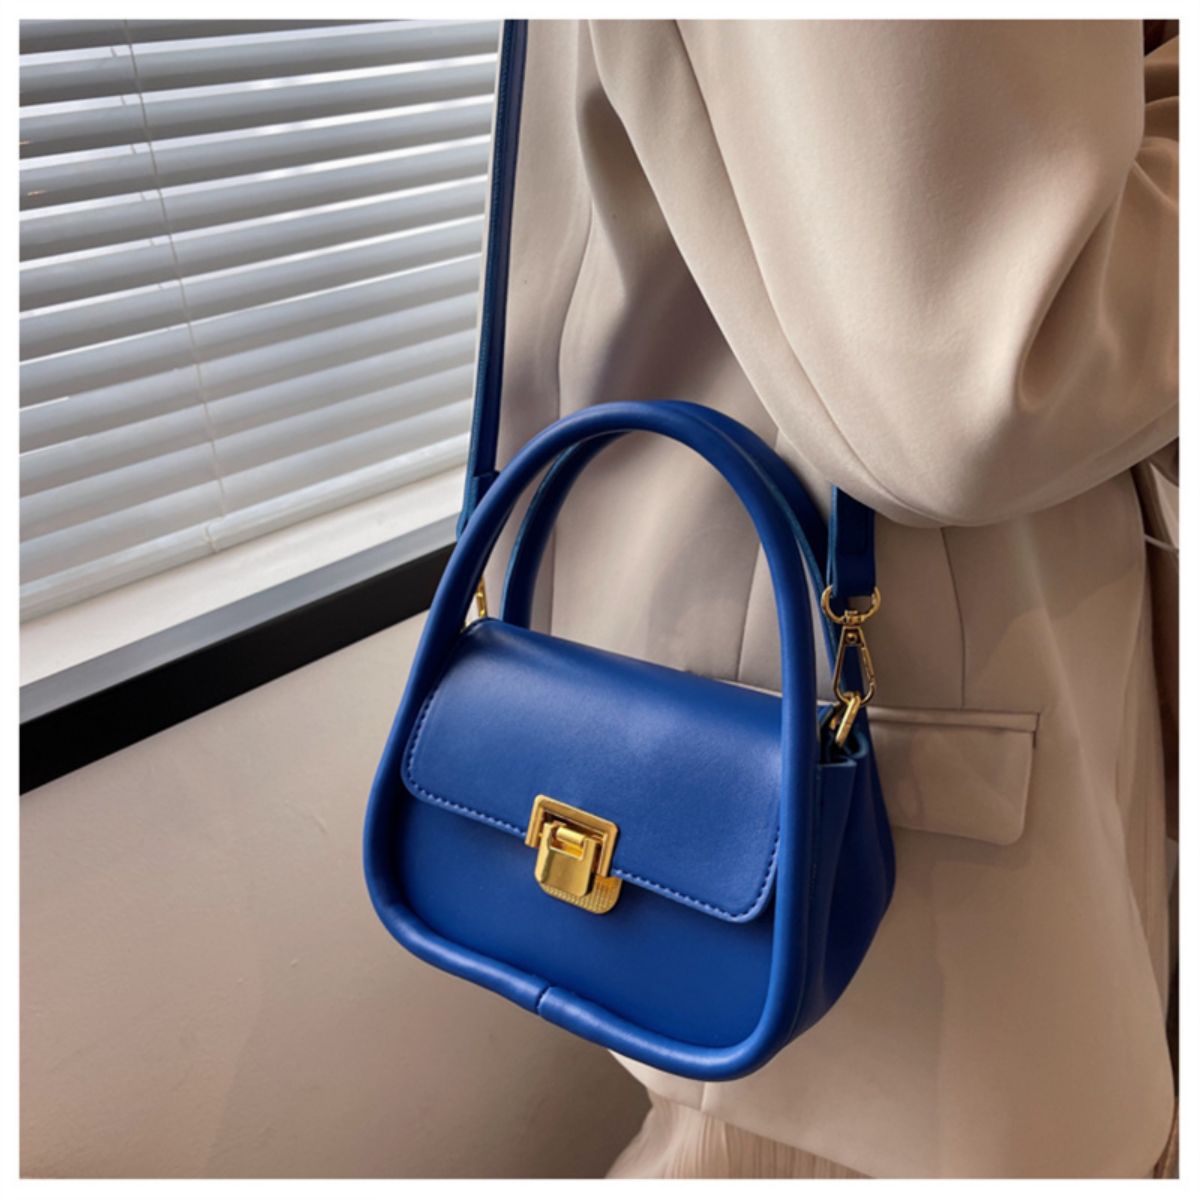 bolsa feminina, bolsa moderna, bolsa minimalista, bolsa estilosa, bolsa azul, bolsa marrom, bolsa branca